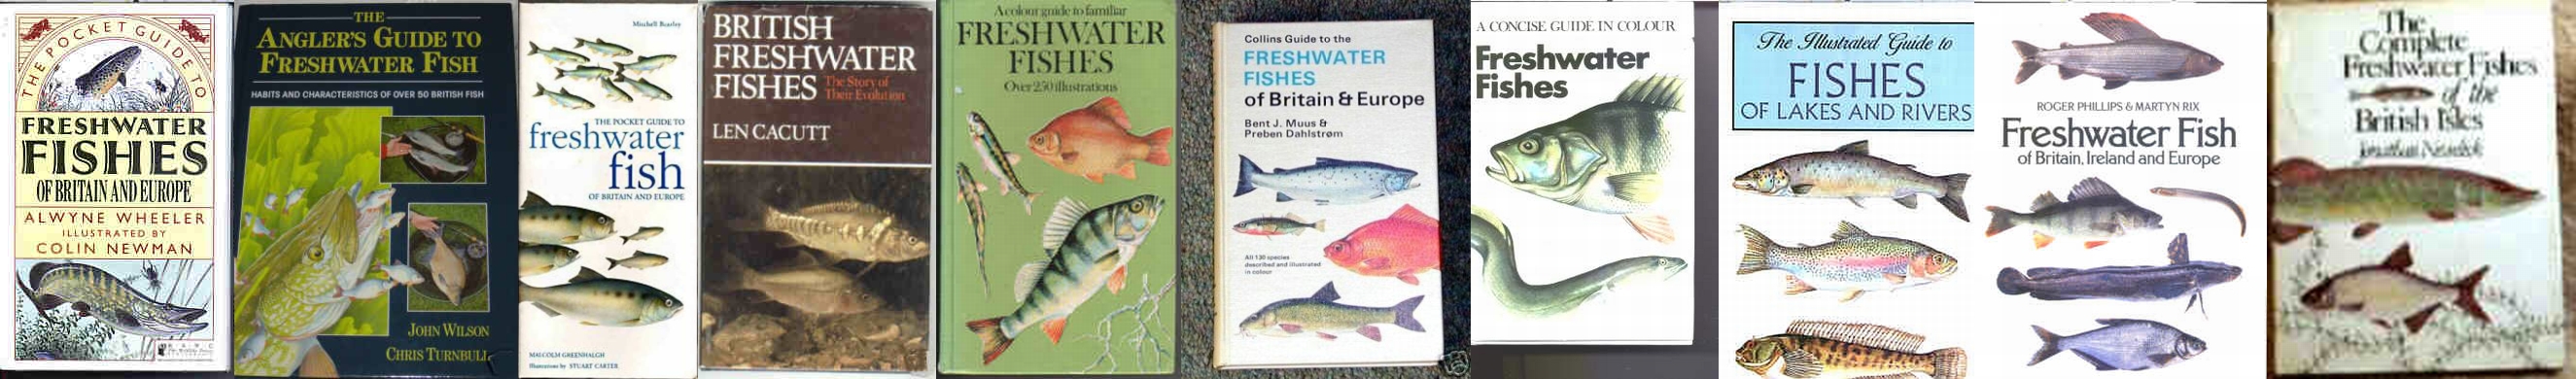 Books on British Freshwater Fishes.British Freshwater Fishes